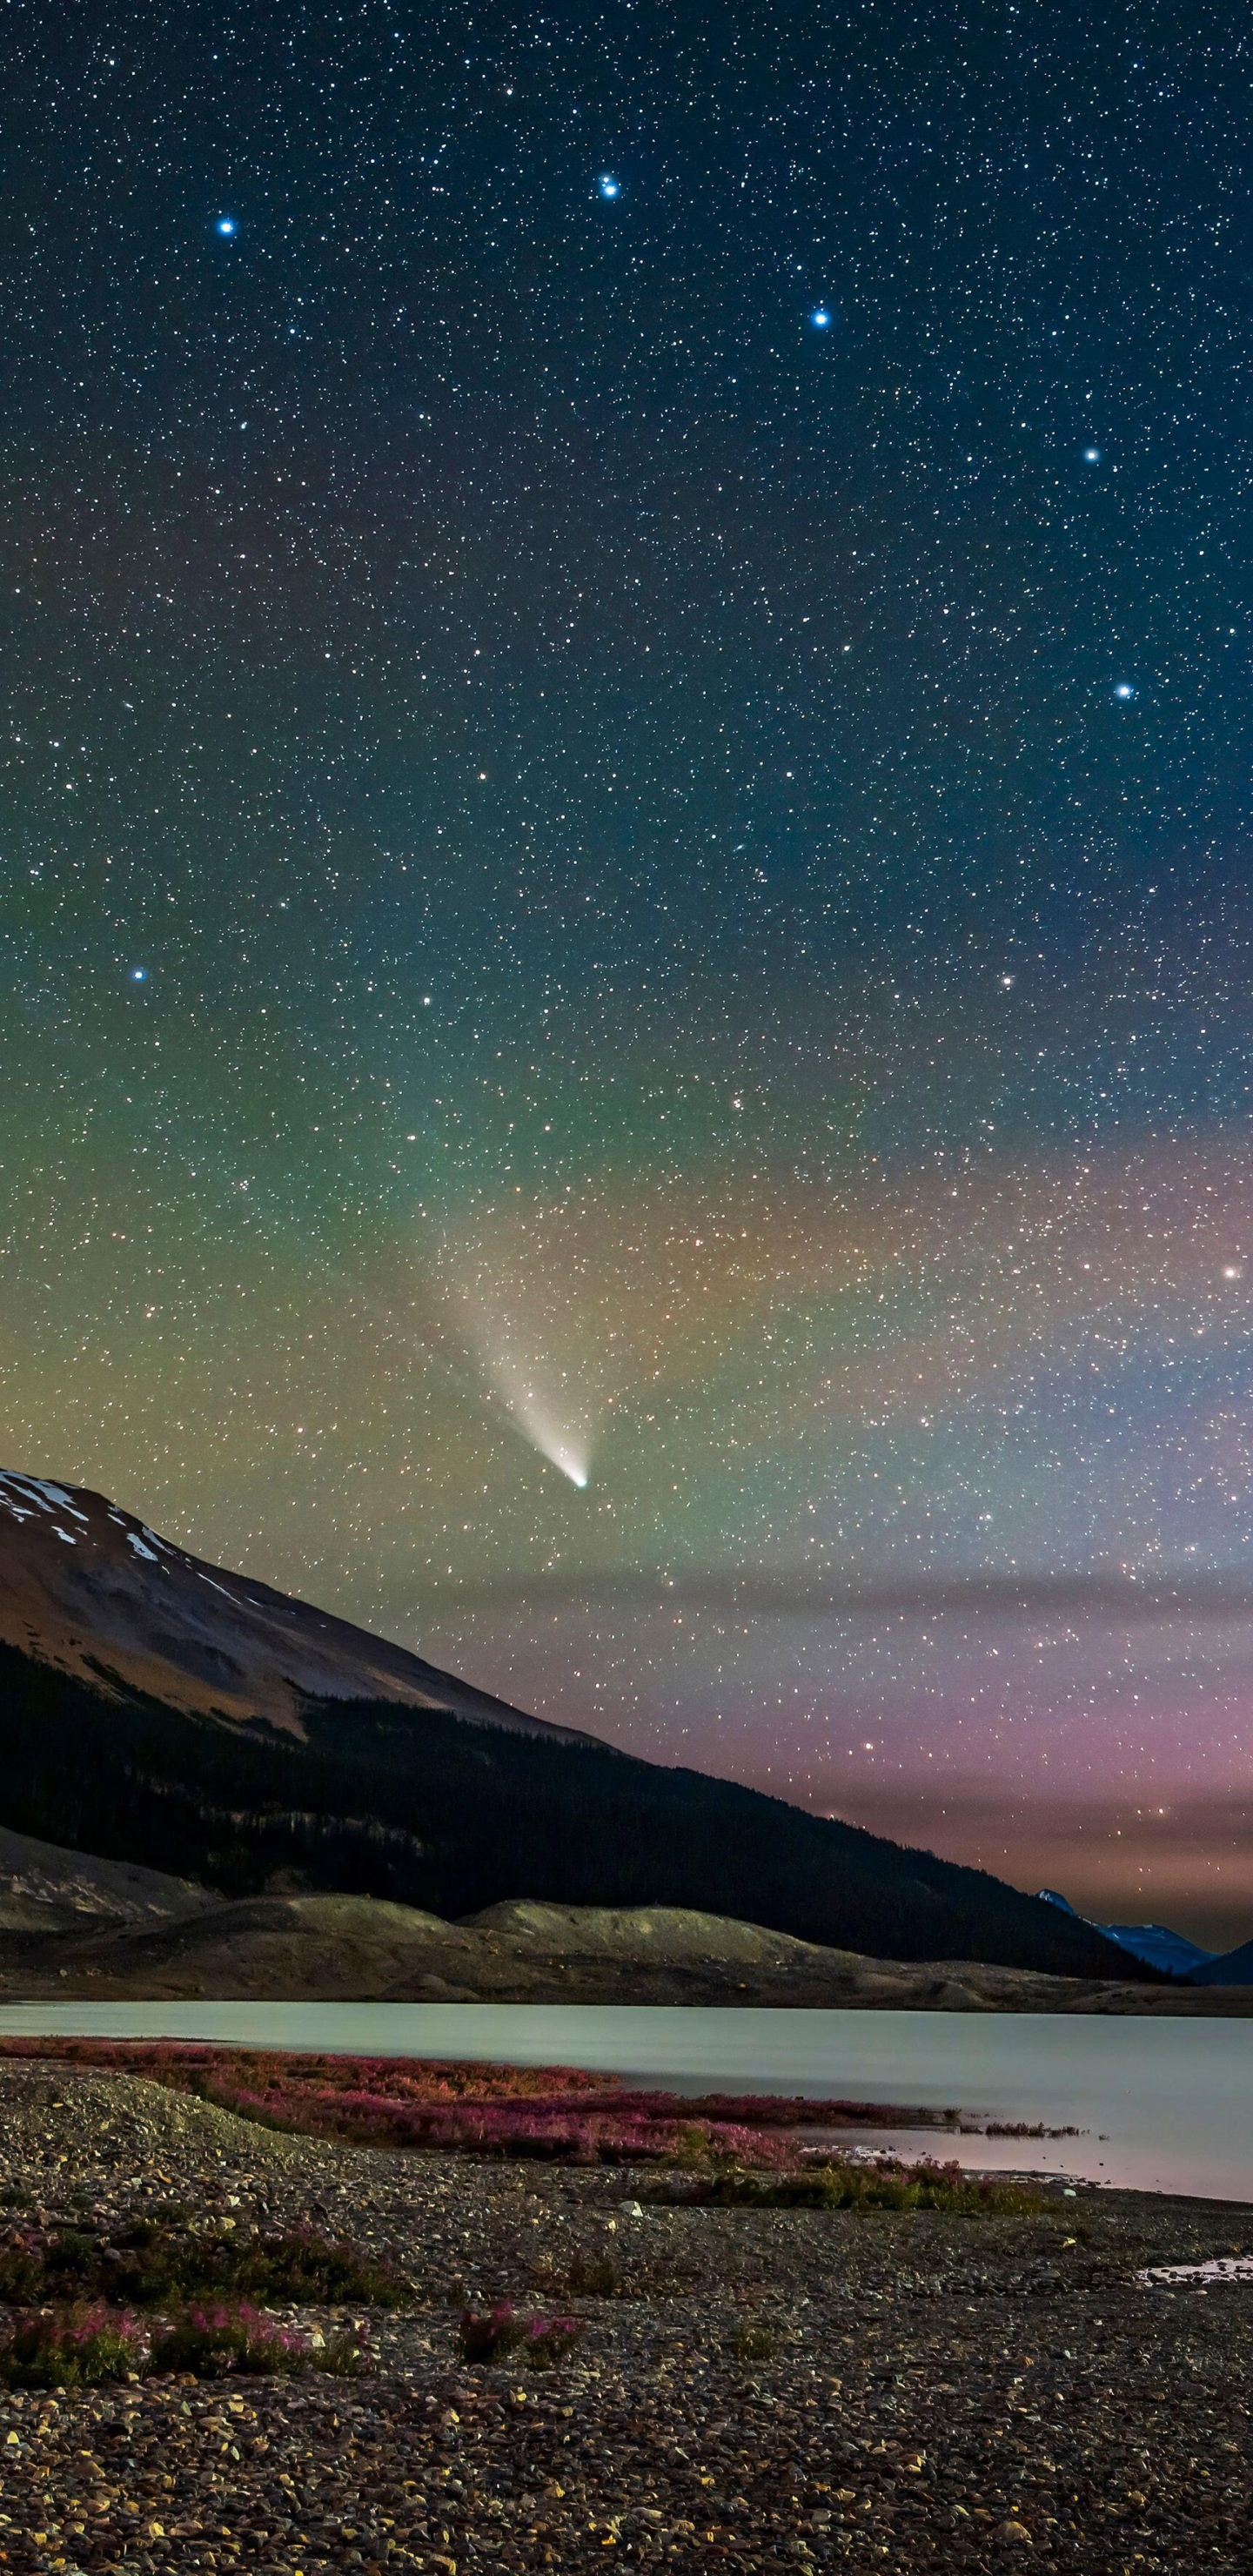 Comet NEOWISE streaks across the sky over Sunwapta Lake in Jasper National Park, Alberta, Canada